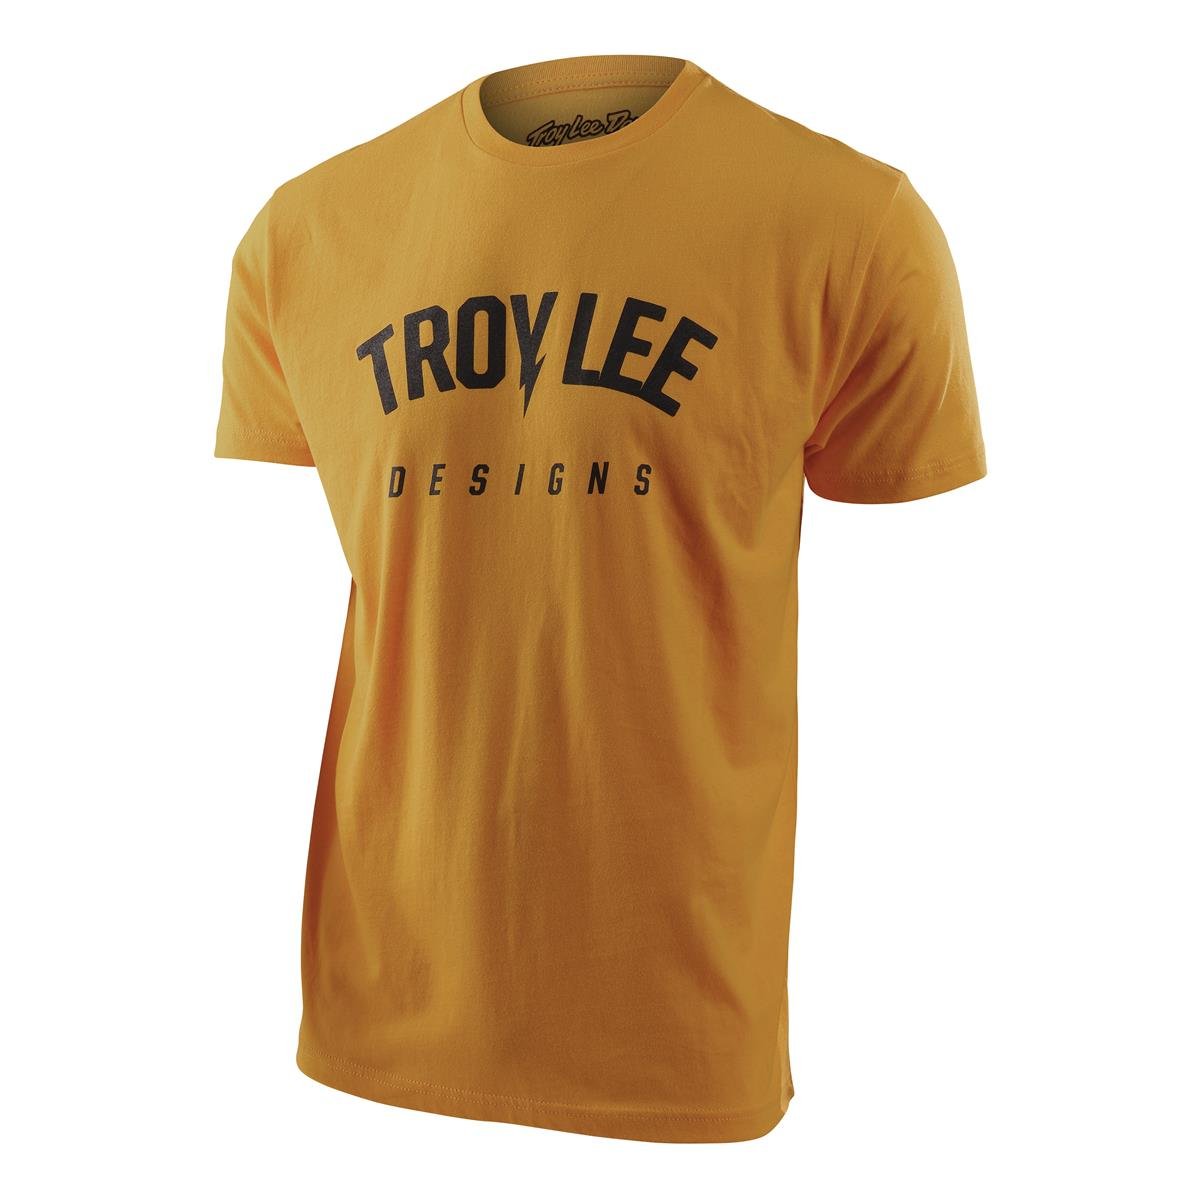 Troy Lee Designs T-Shirt Bolt Mustard